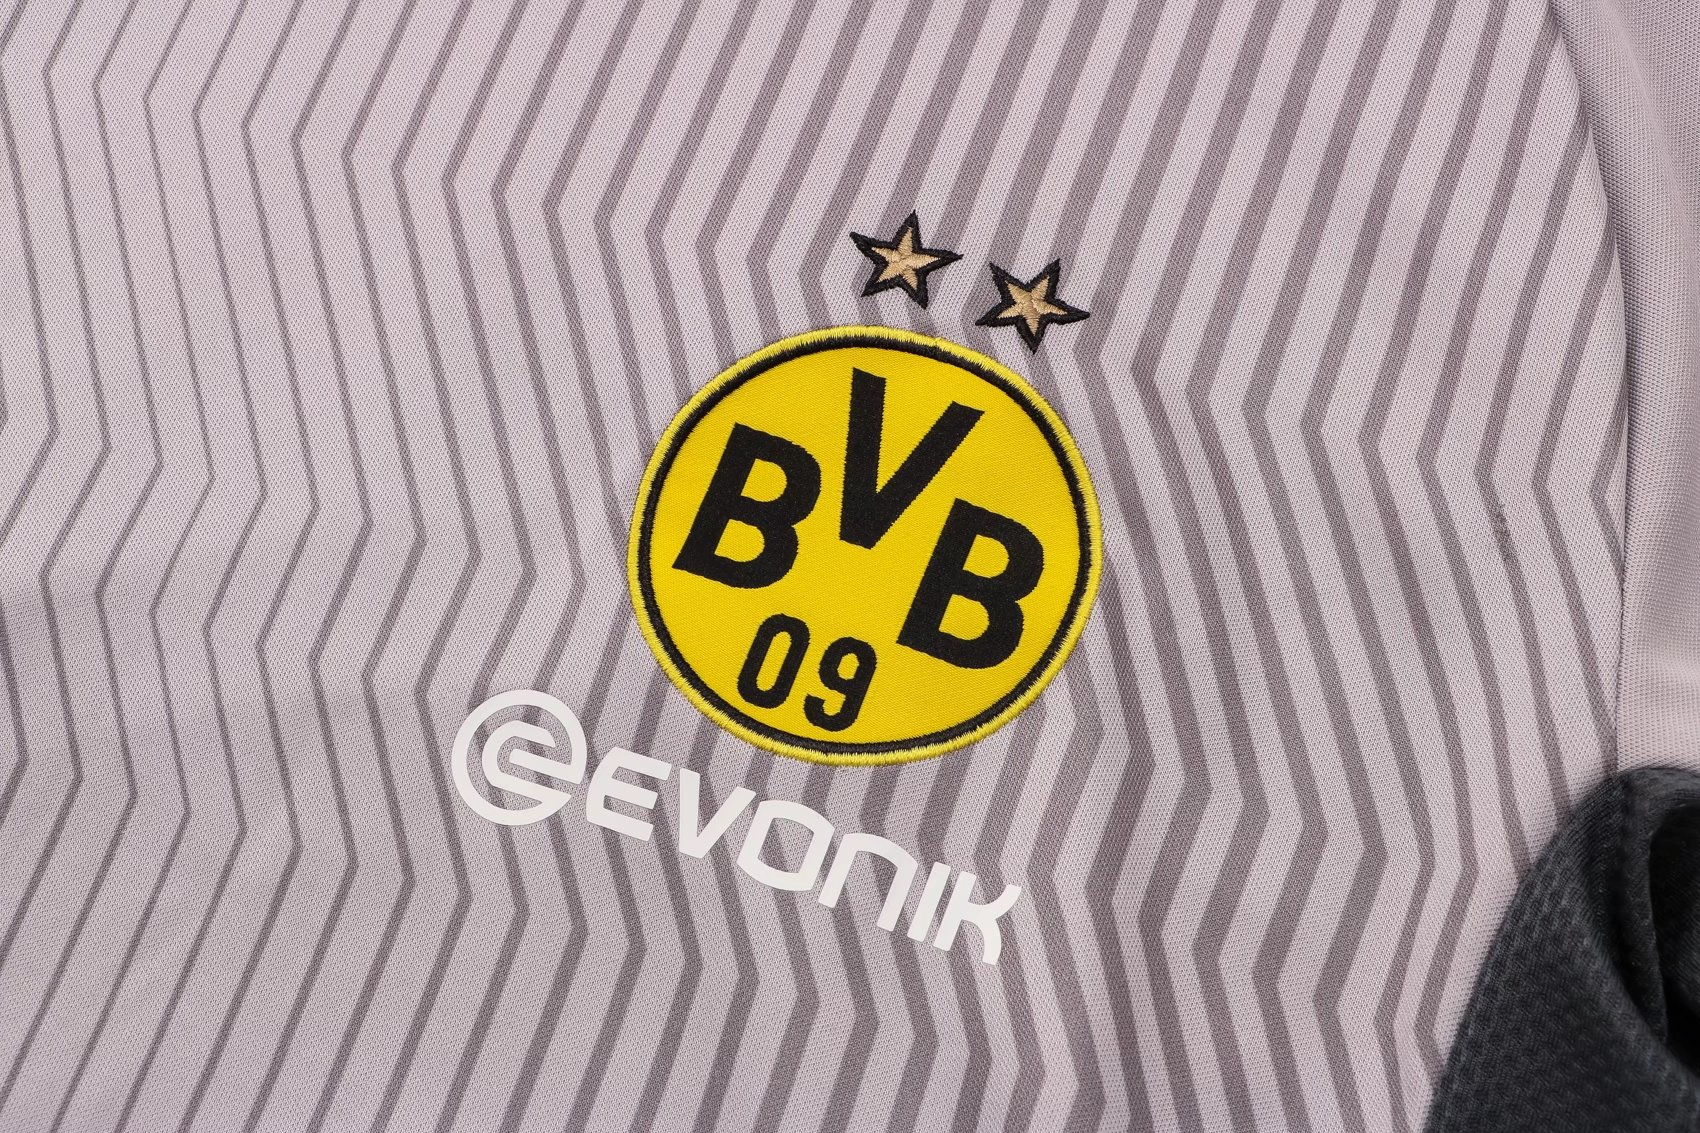 Borussia Dortmund Soccer Training Jersey Replica Grey Mens 2021-22